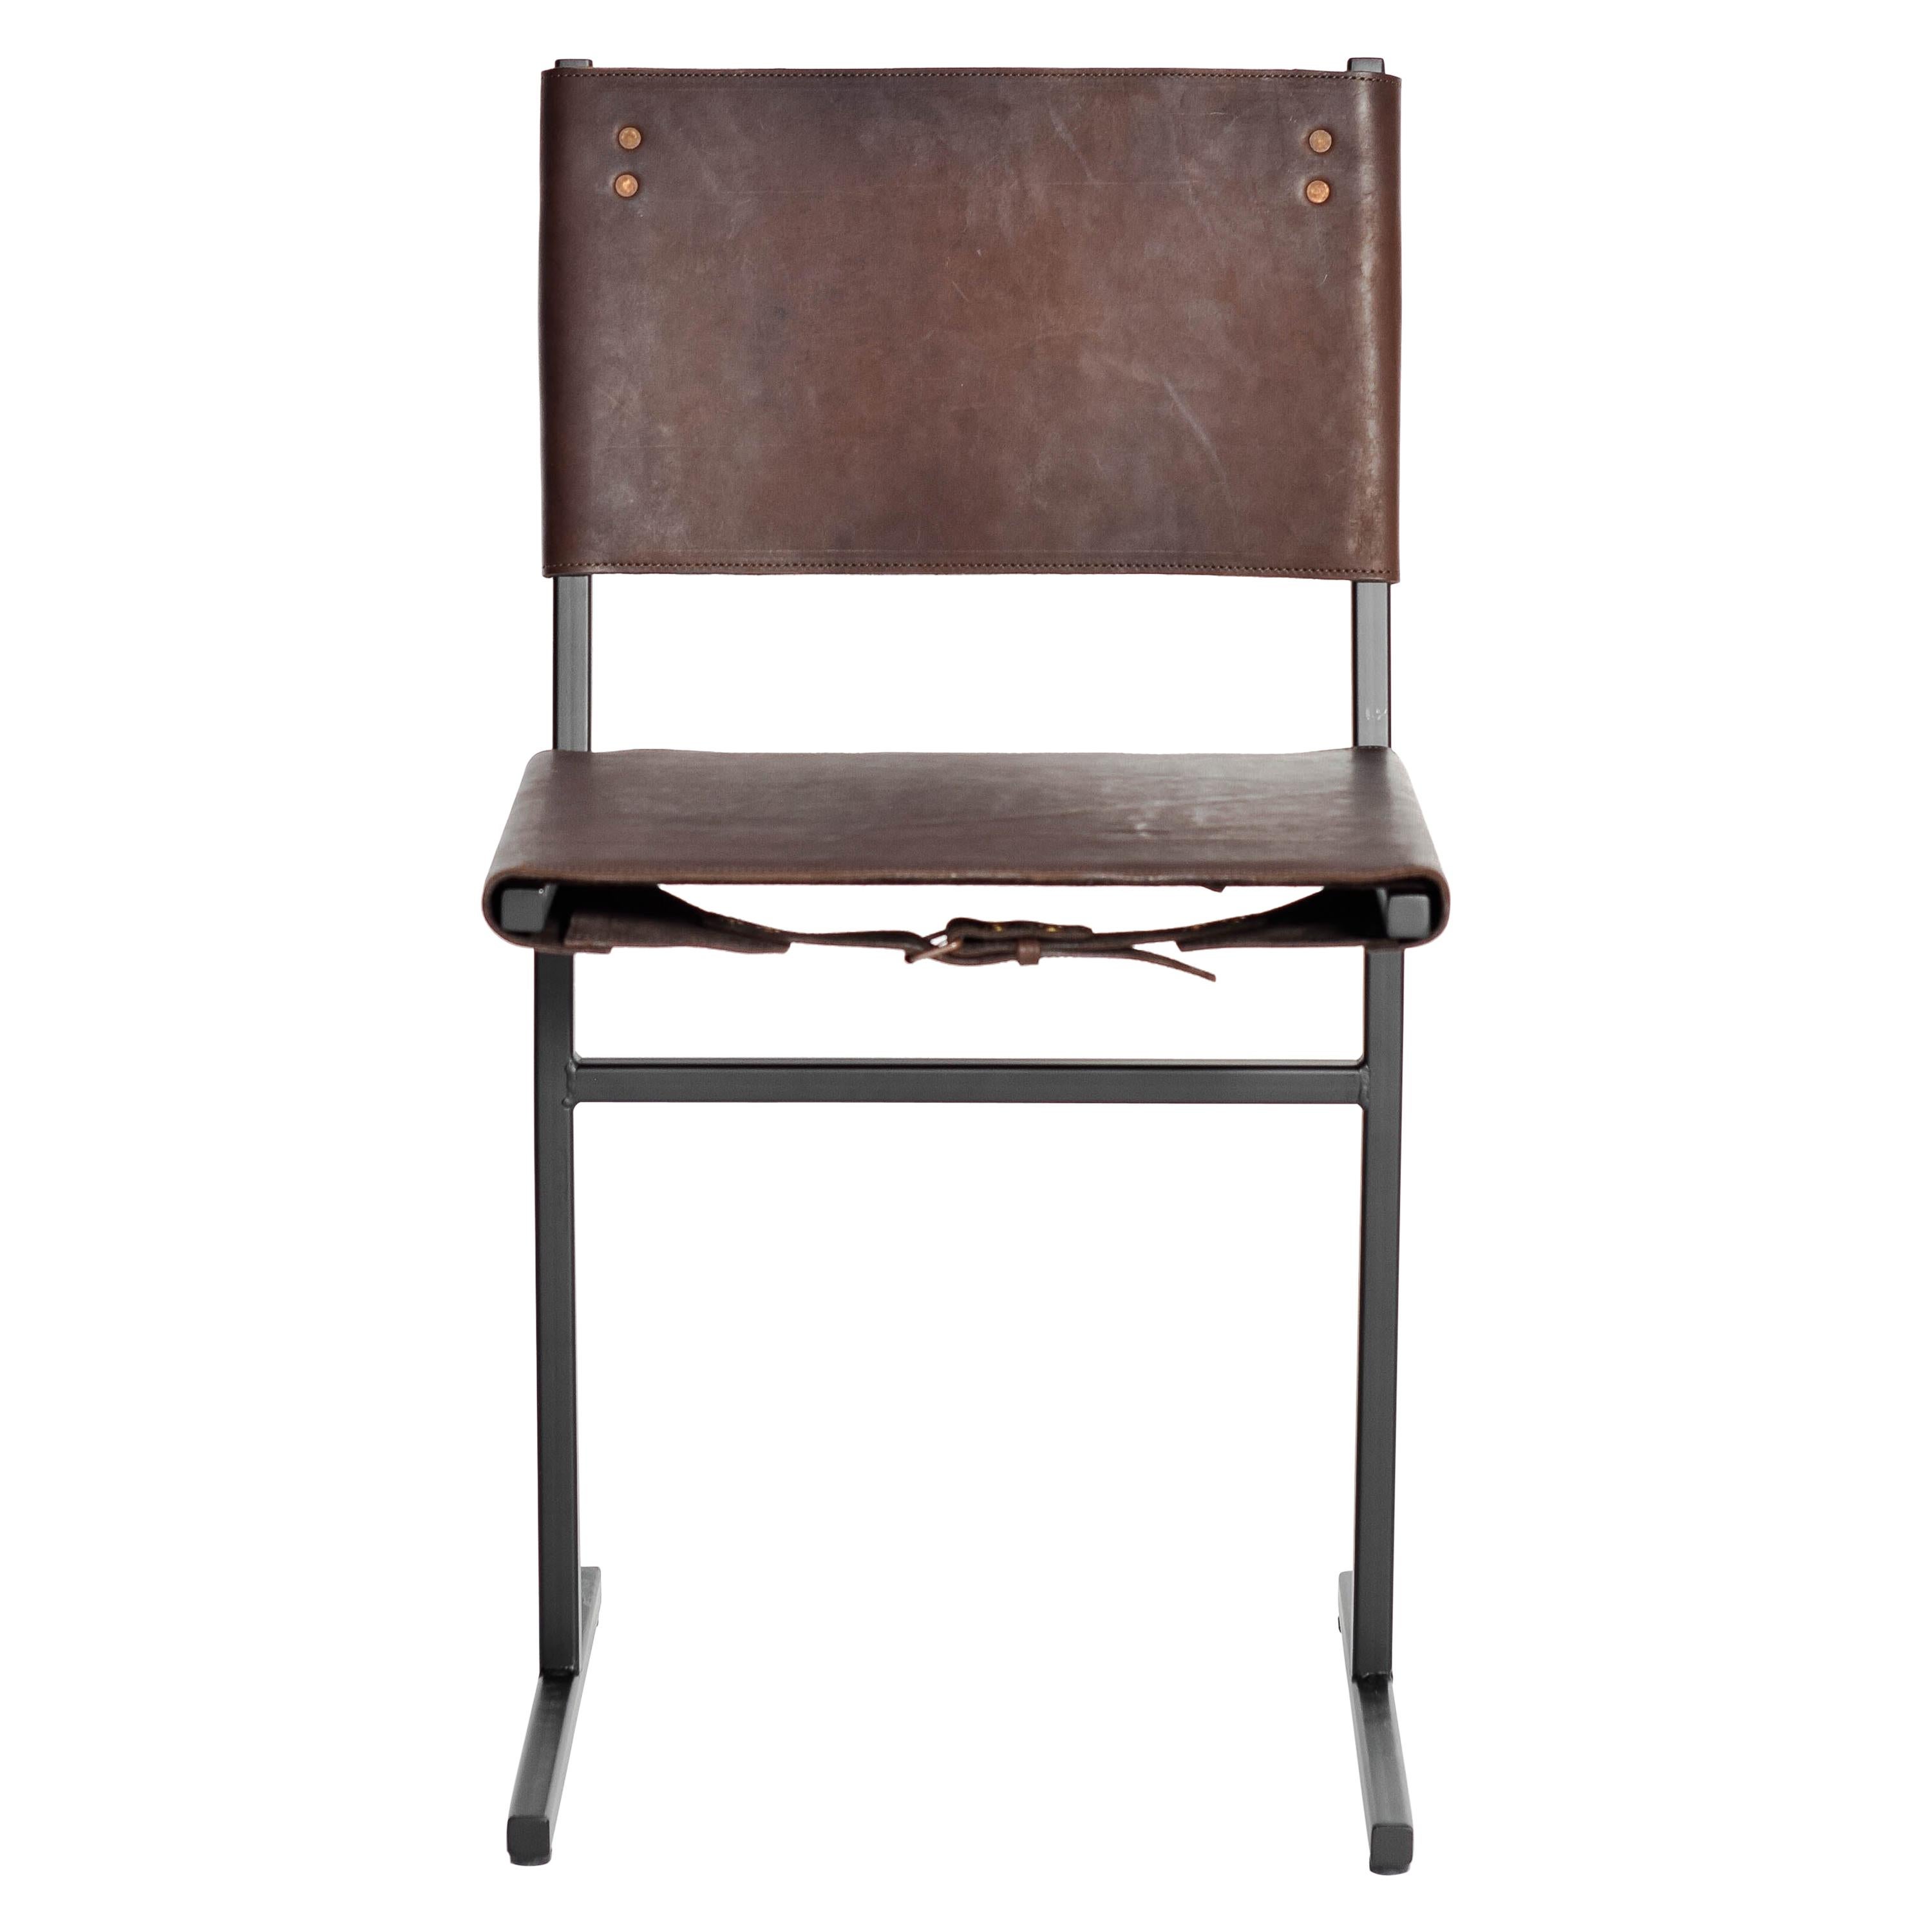 Chocolate and Black Memento Chair, Jesse Sanderson